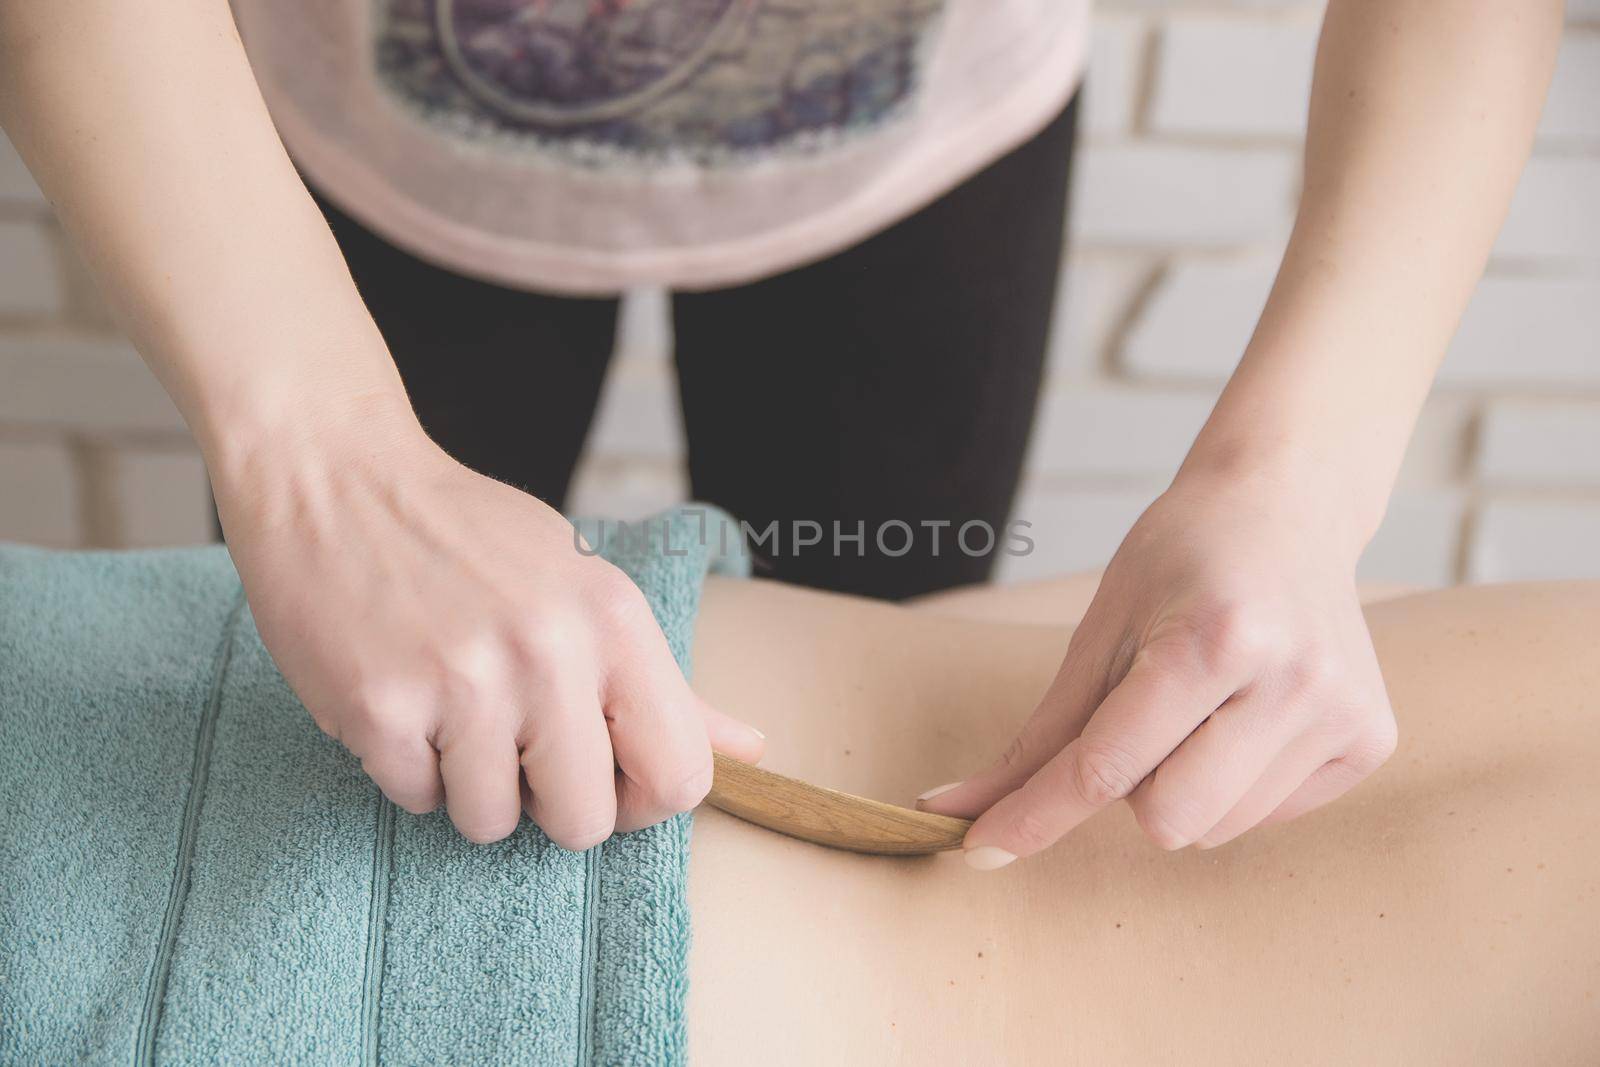 therapeutic back massage in the spa salon makes the girl a massage by ozornina